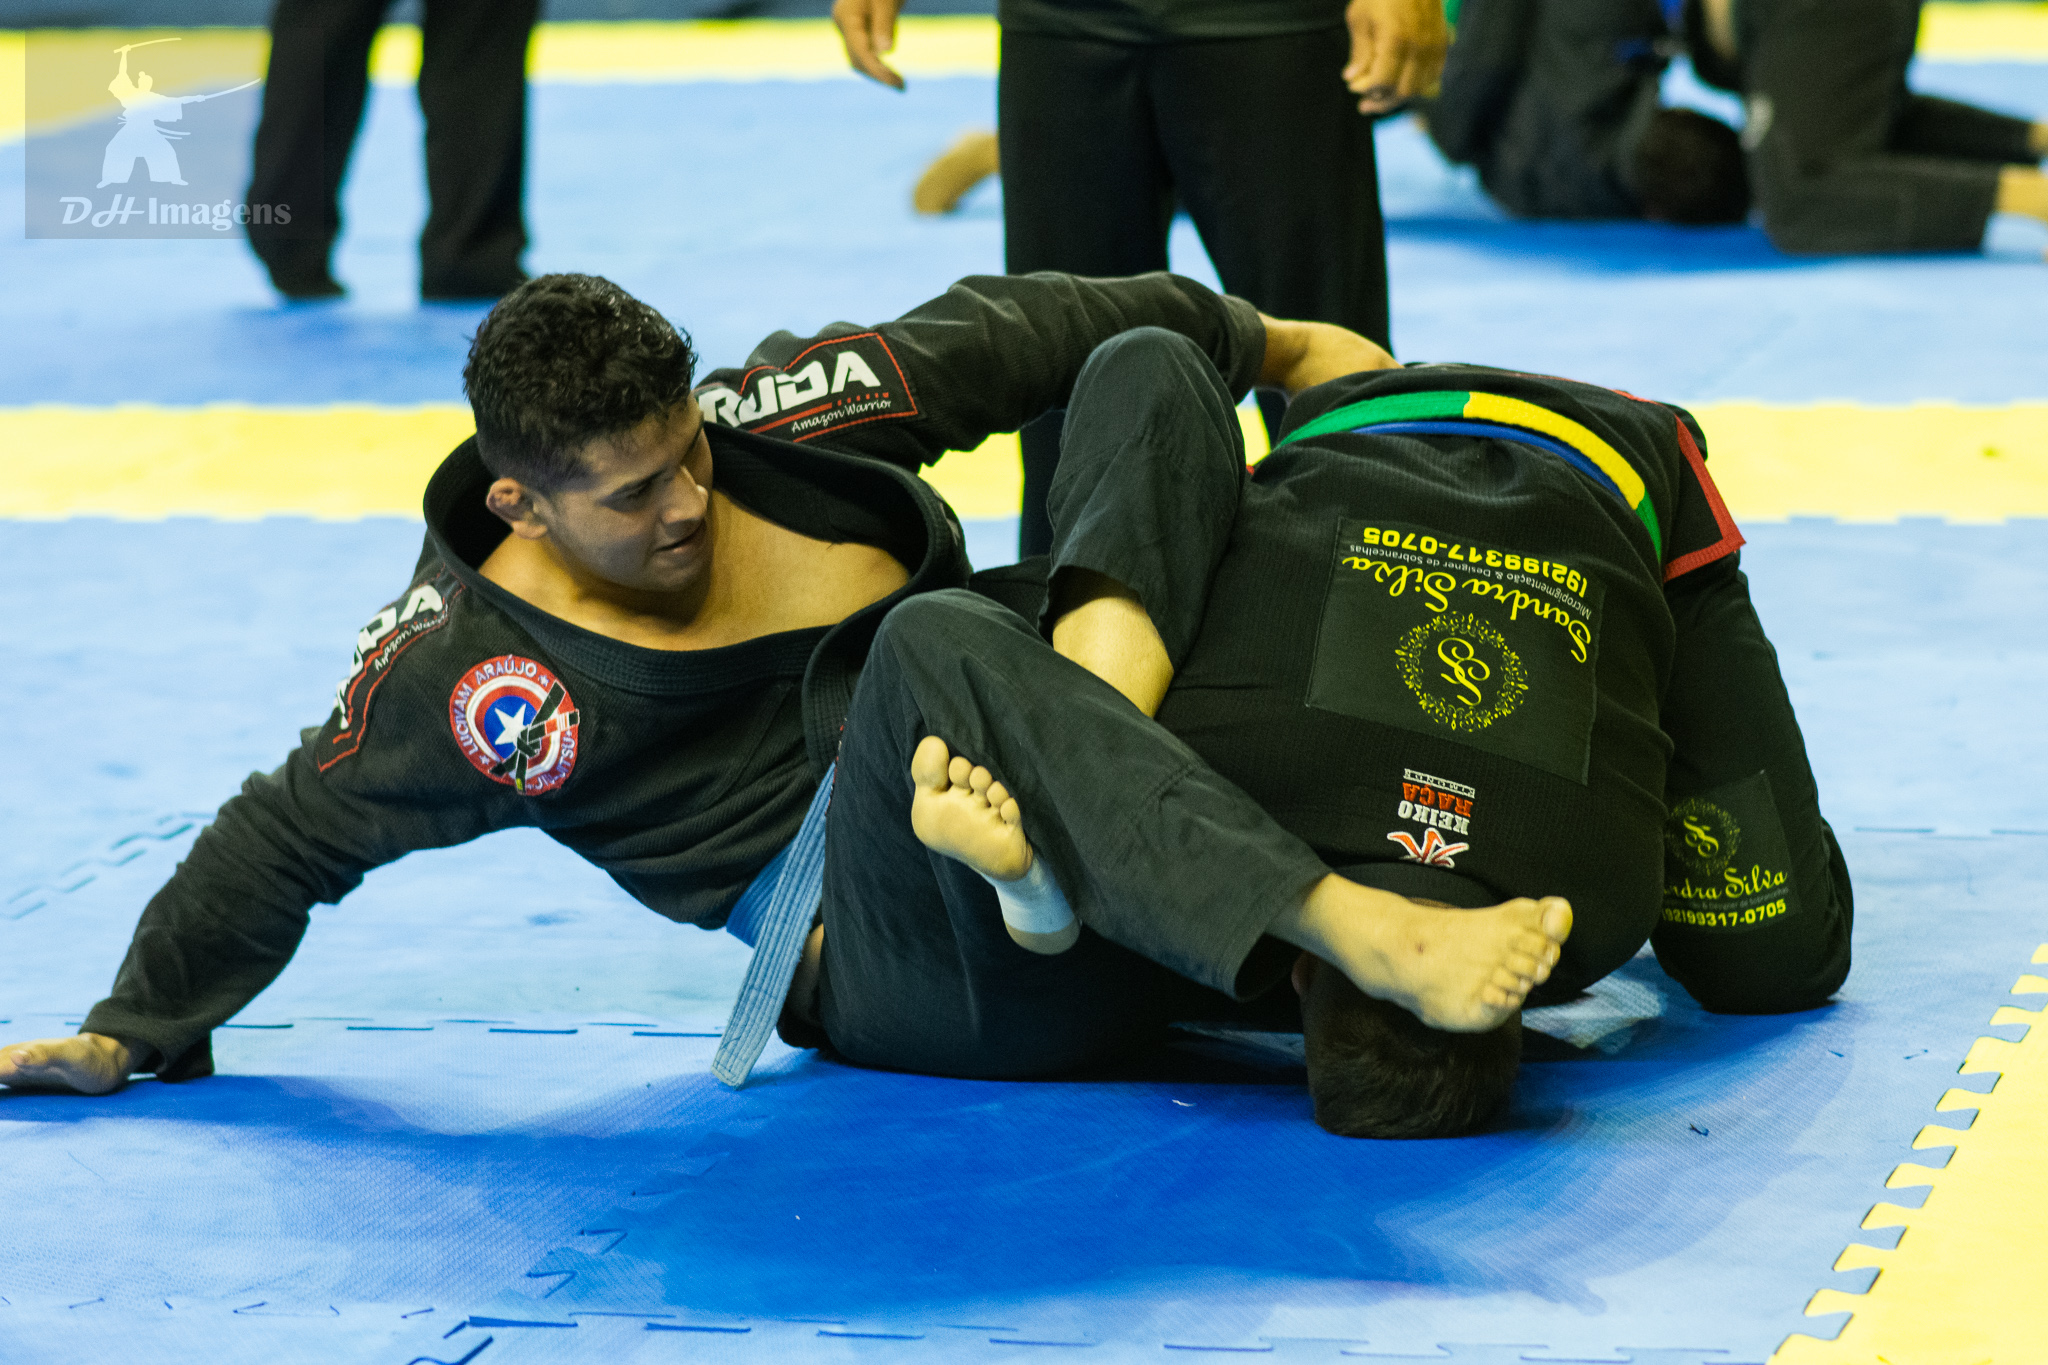 Campeonato Norte Brasileiro de Jiu-Jitsu agitou Manaus, capital do Amazonas (Foto Diogo Ferero @dhimagens)